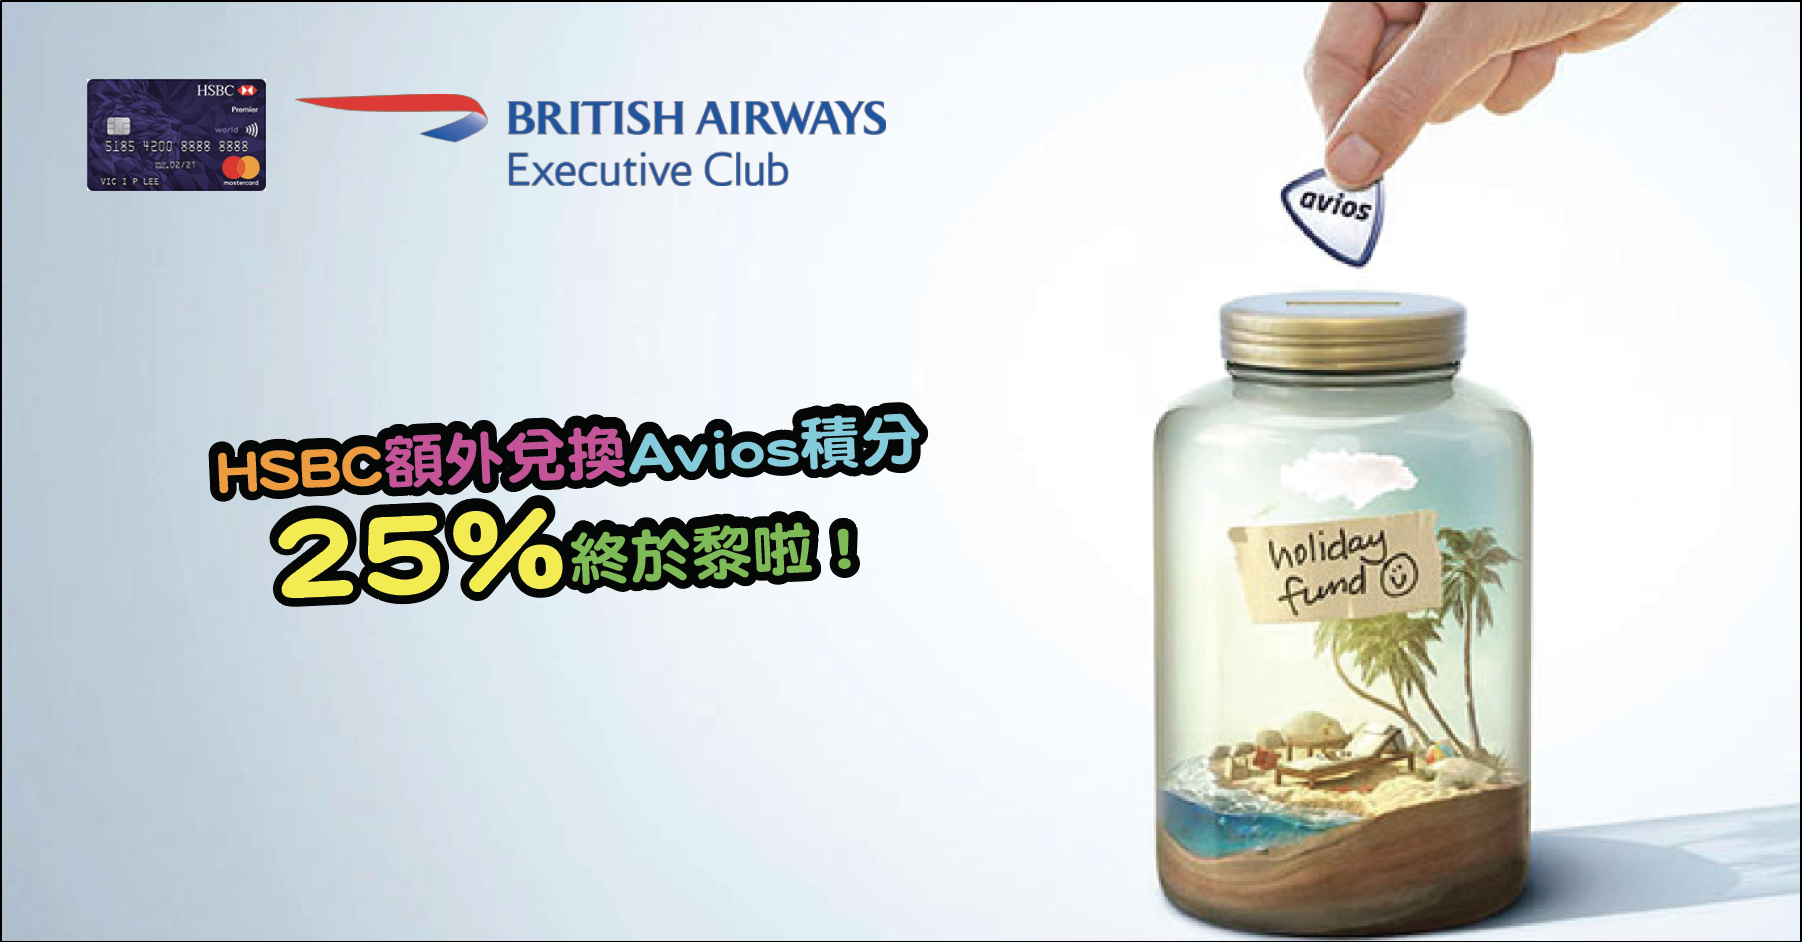 【HSBC信用卡兌換Avios優惠】「獎賞錢」轉換成英航會員俱樂部 Executive Club Avios 有20%額外Avios積分！1「獎賞錢」= 24 Avios積分！